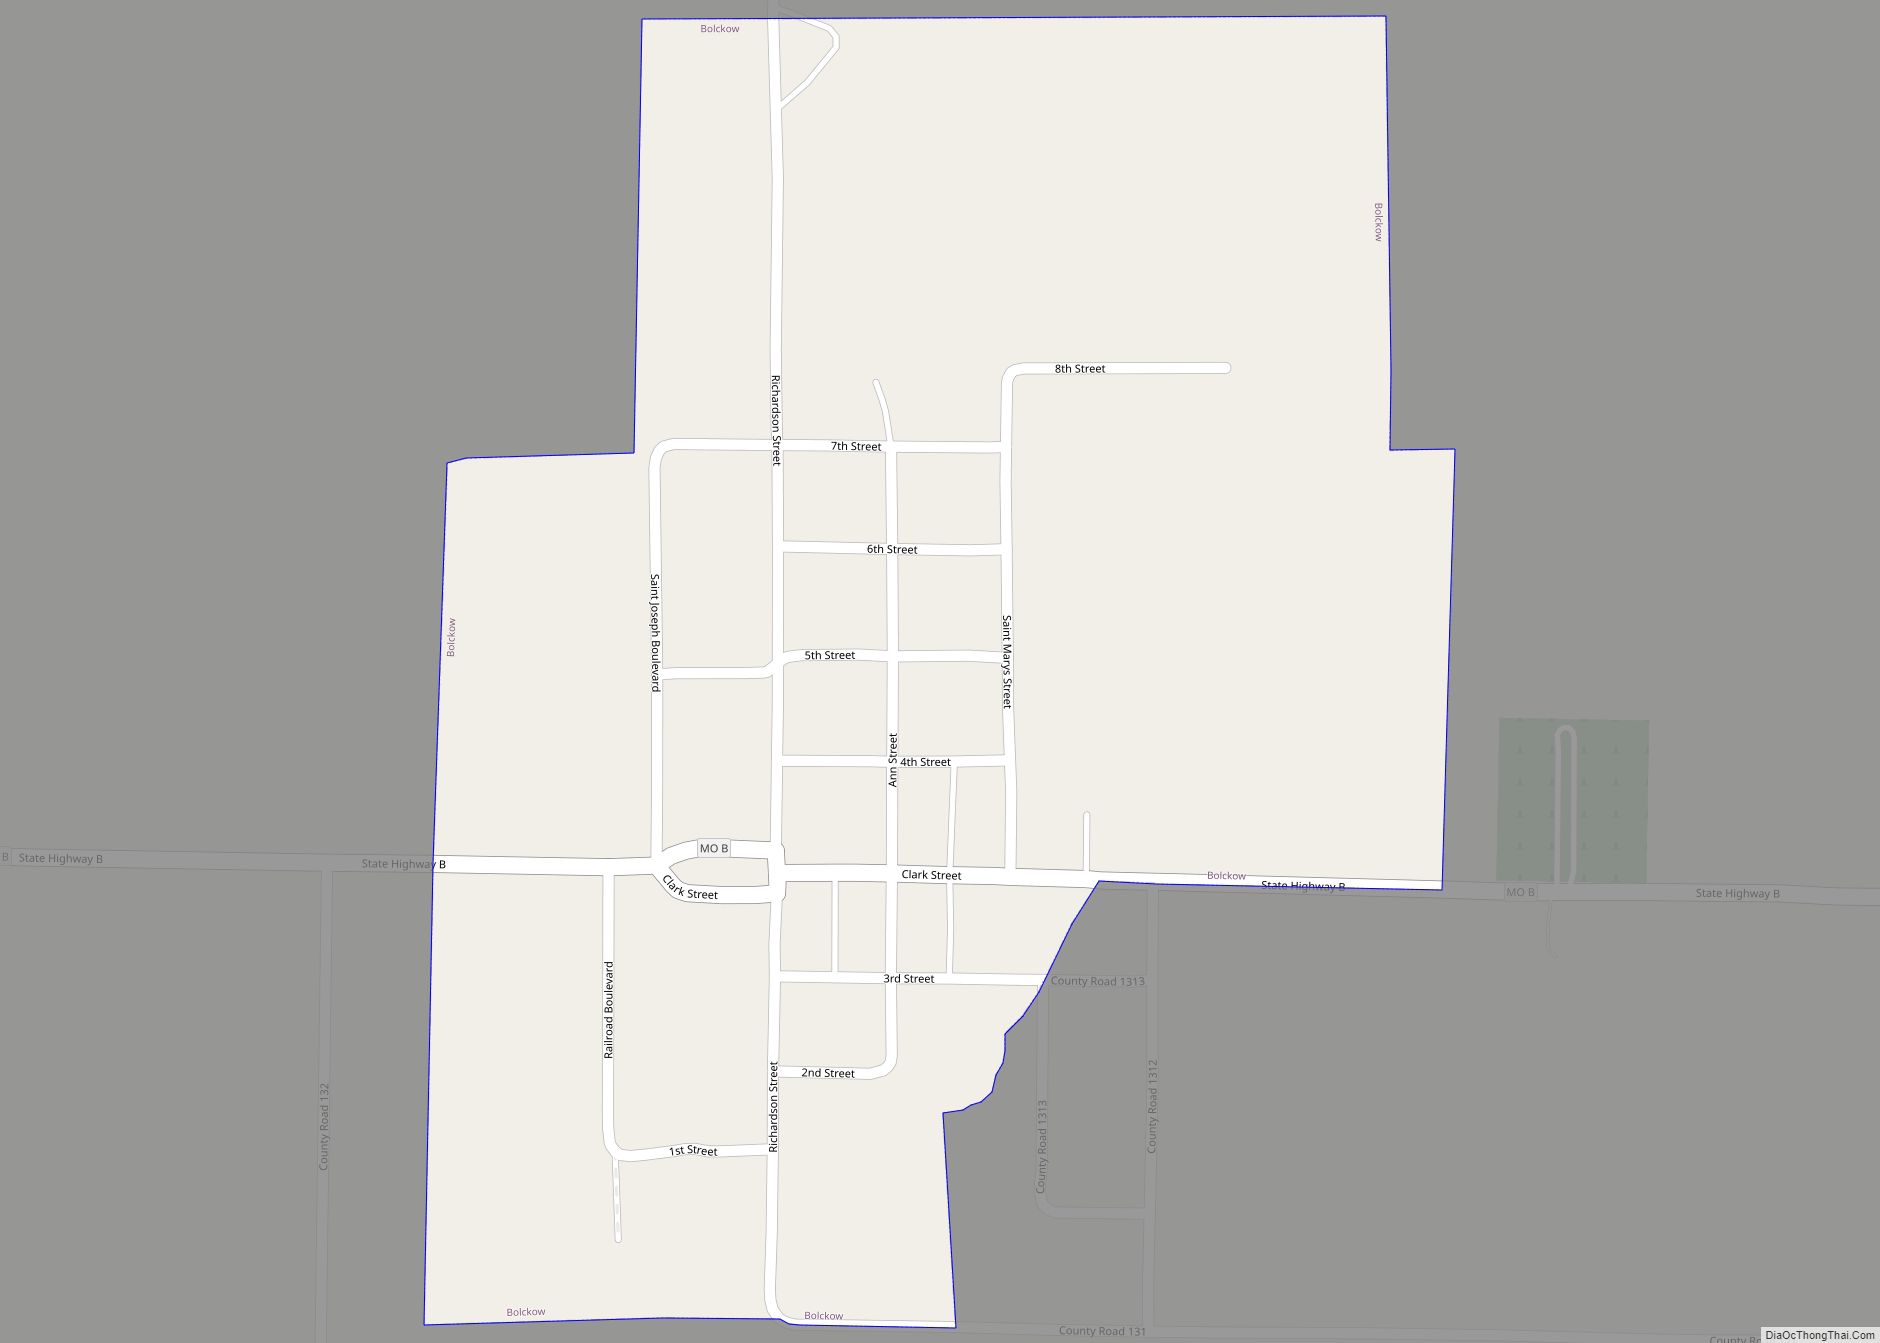 Map of Bolckow city